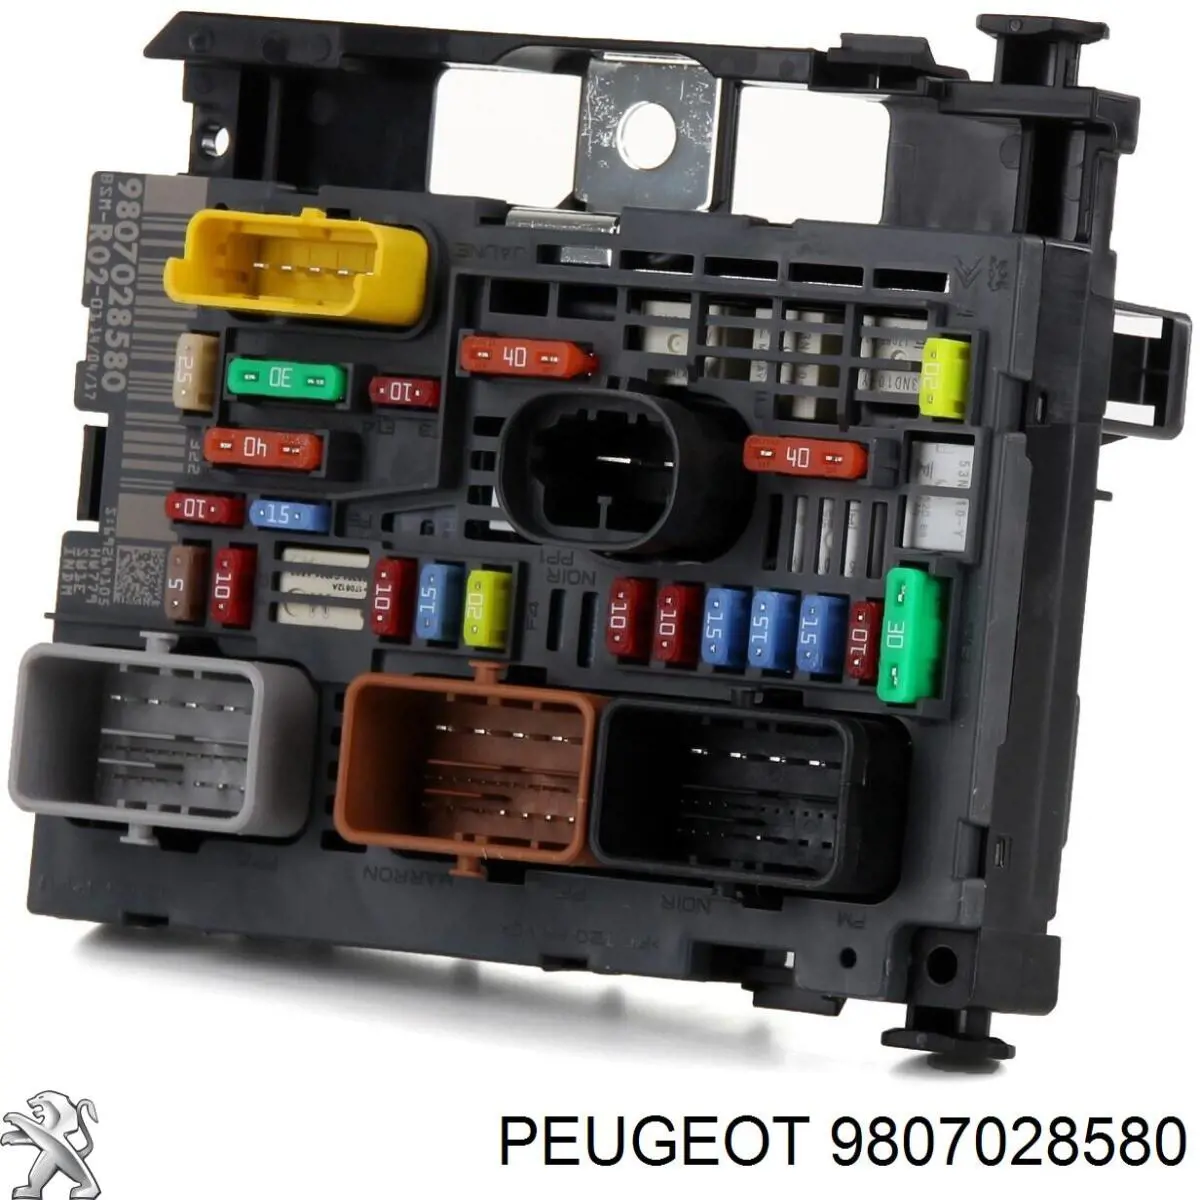 9807028580 Peugeot/Citroen unidade de dispositivos de segurança